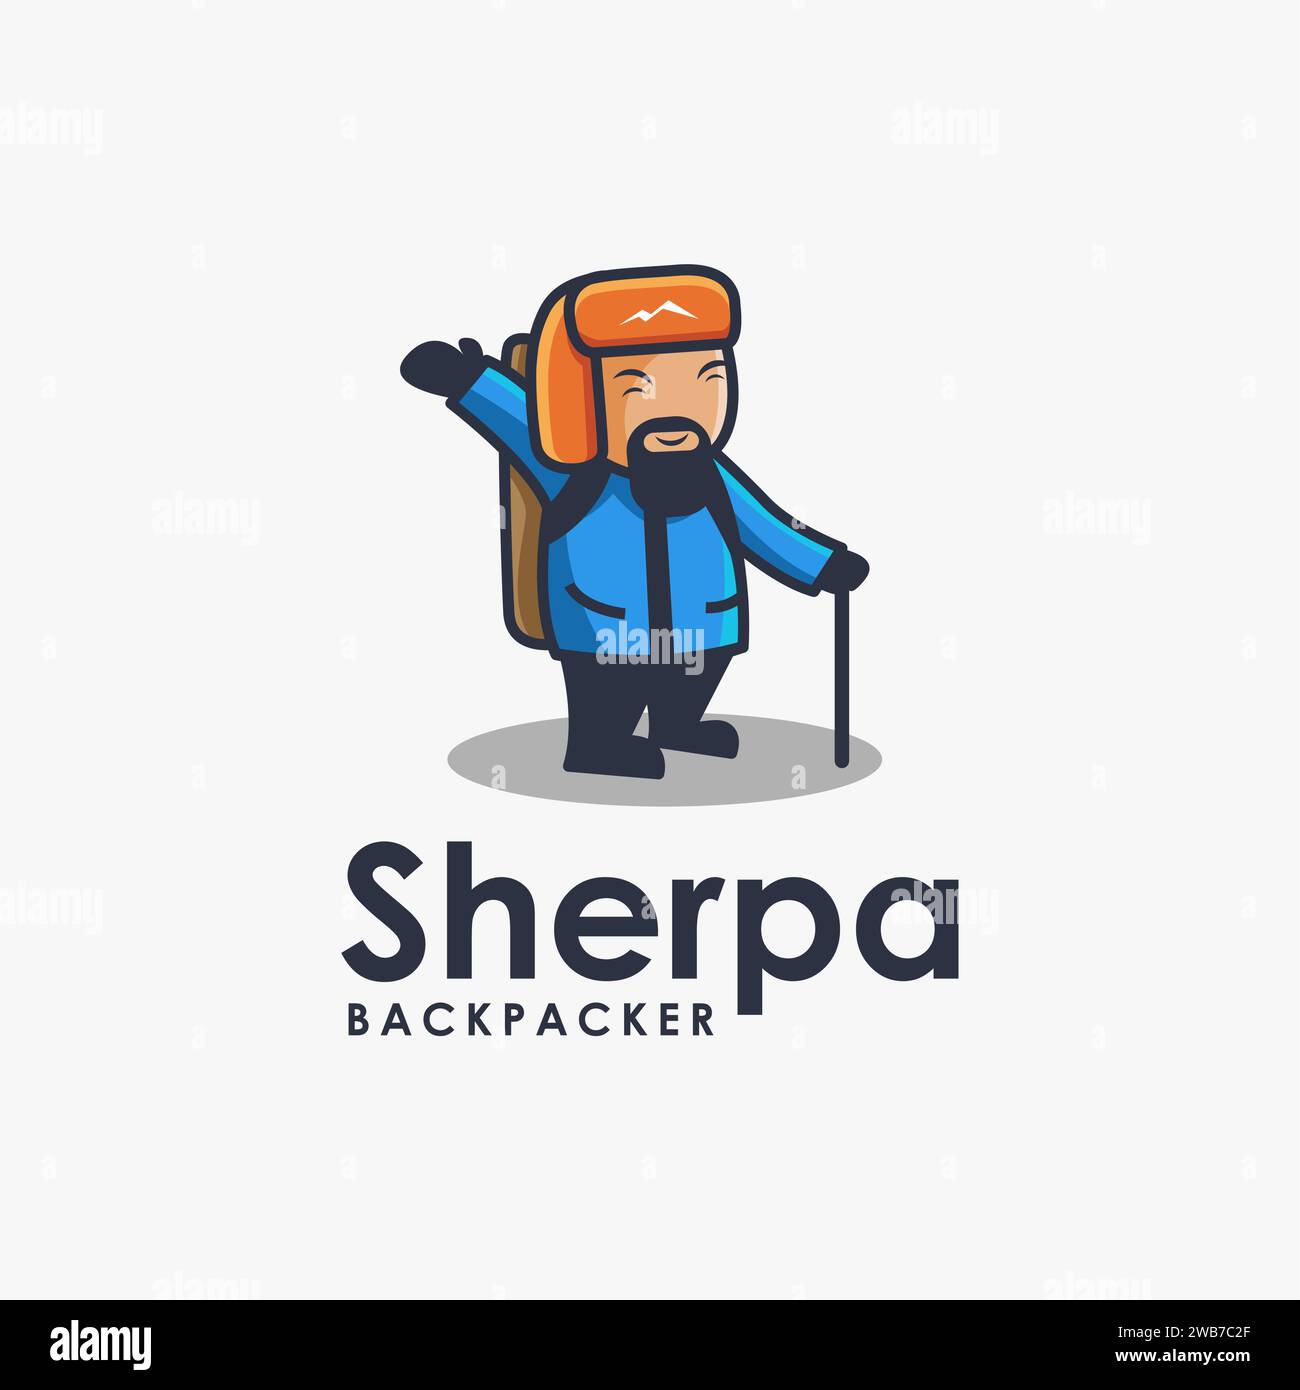 Sherpa backpacker logo mascot vector Stock Vector